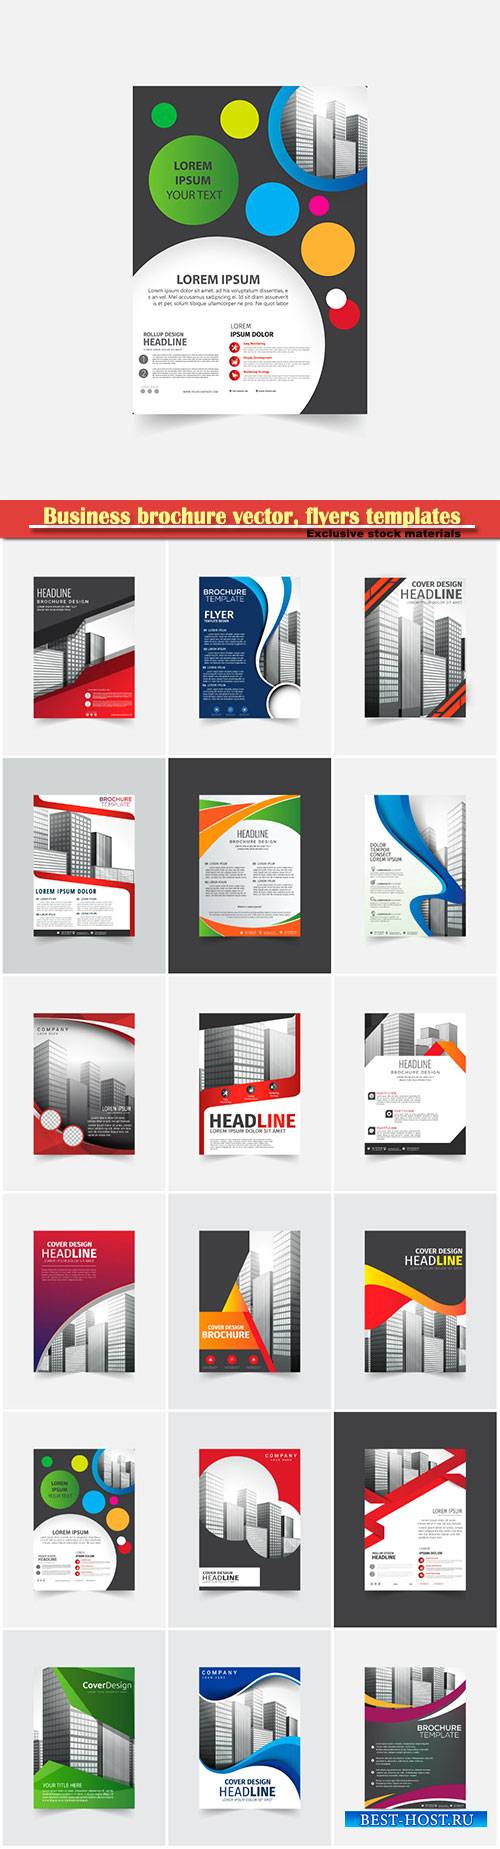 Business brochure vector, flyers templates, report cover design # 104